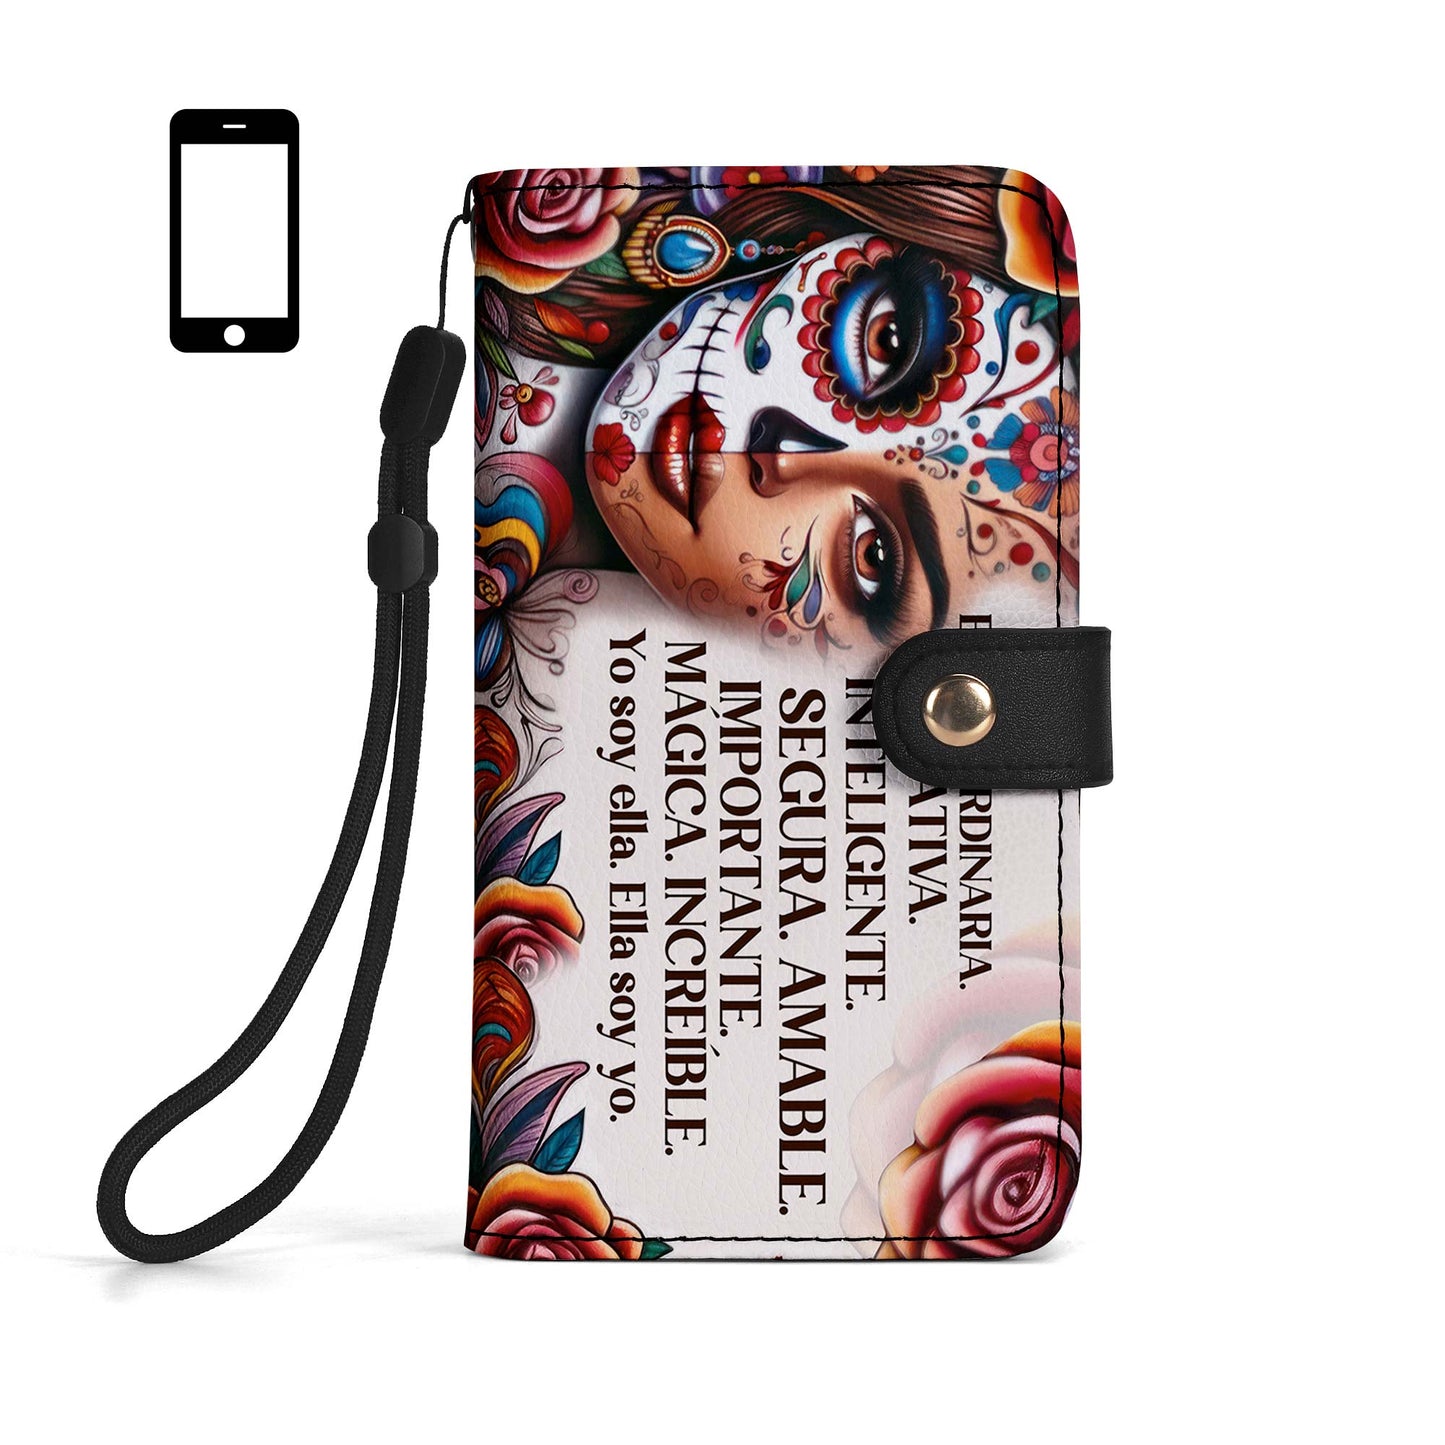 Ella Es - Bespoke Phone Leather Wallet - HG25PW